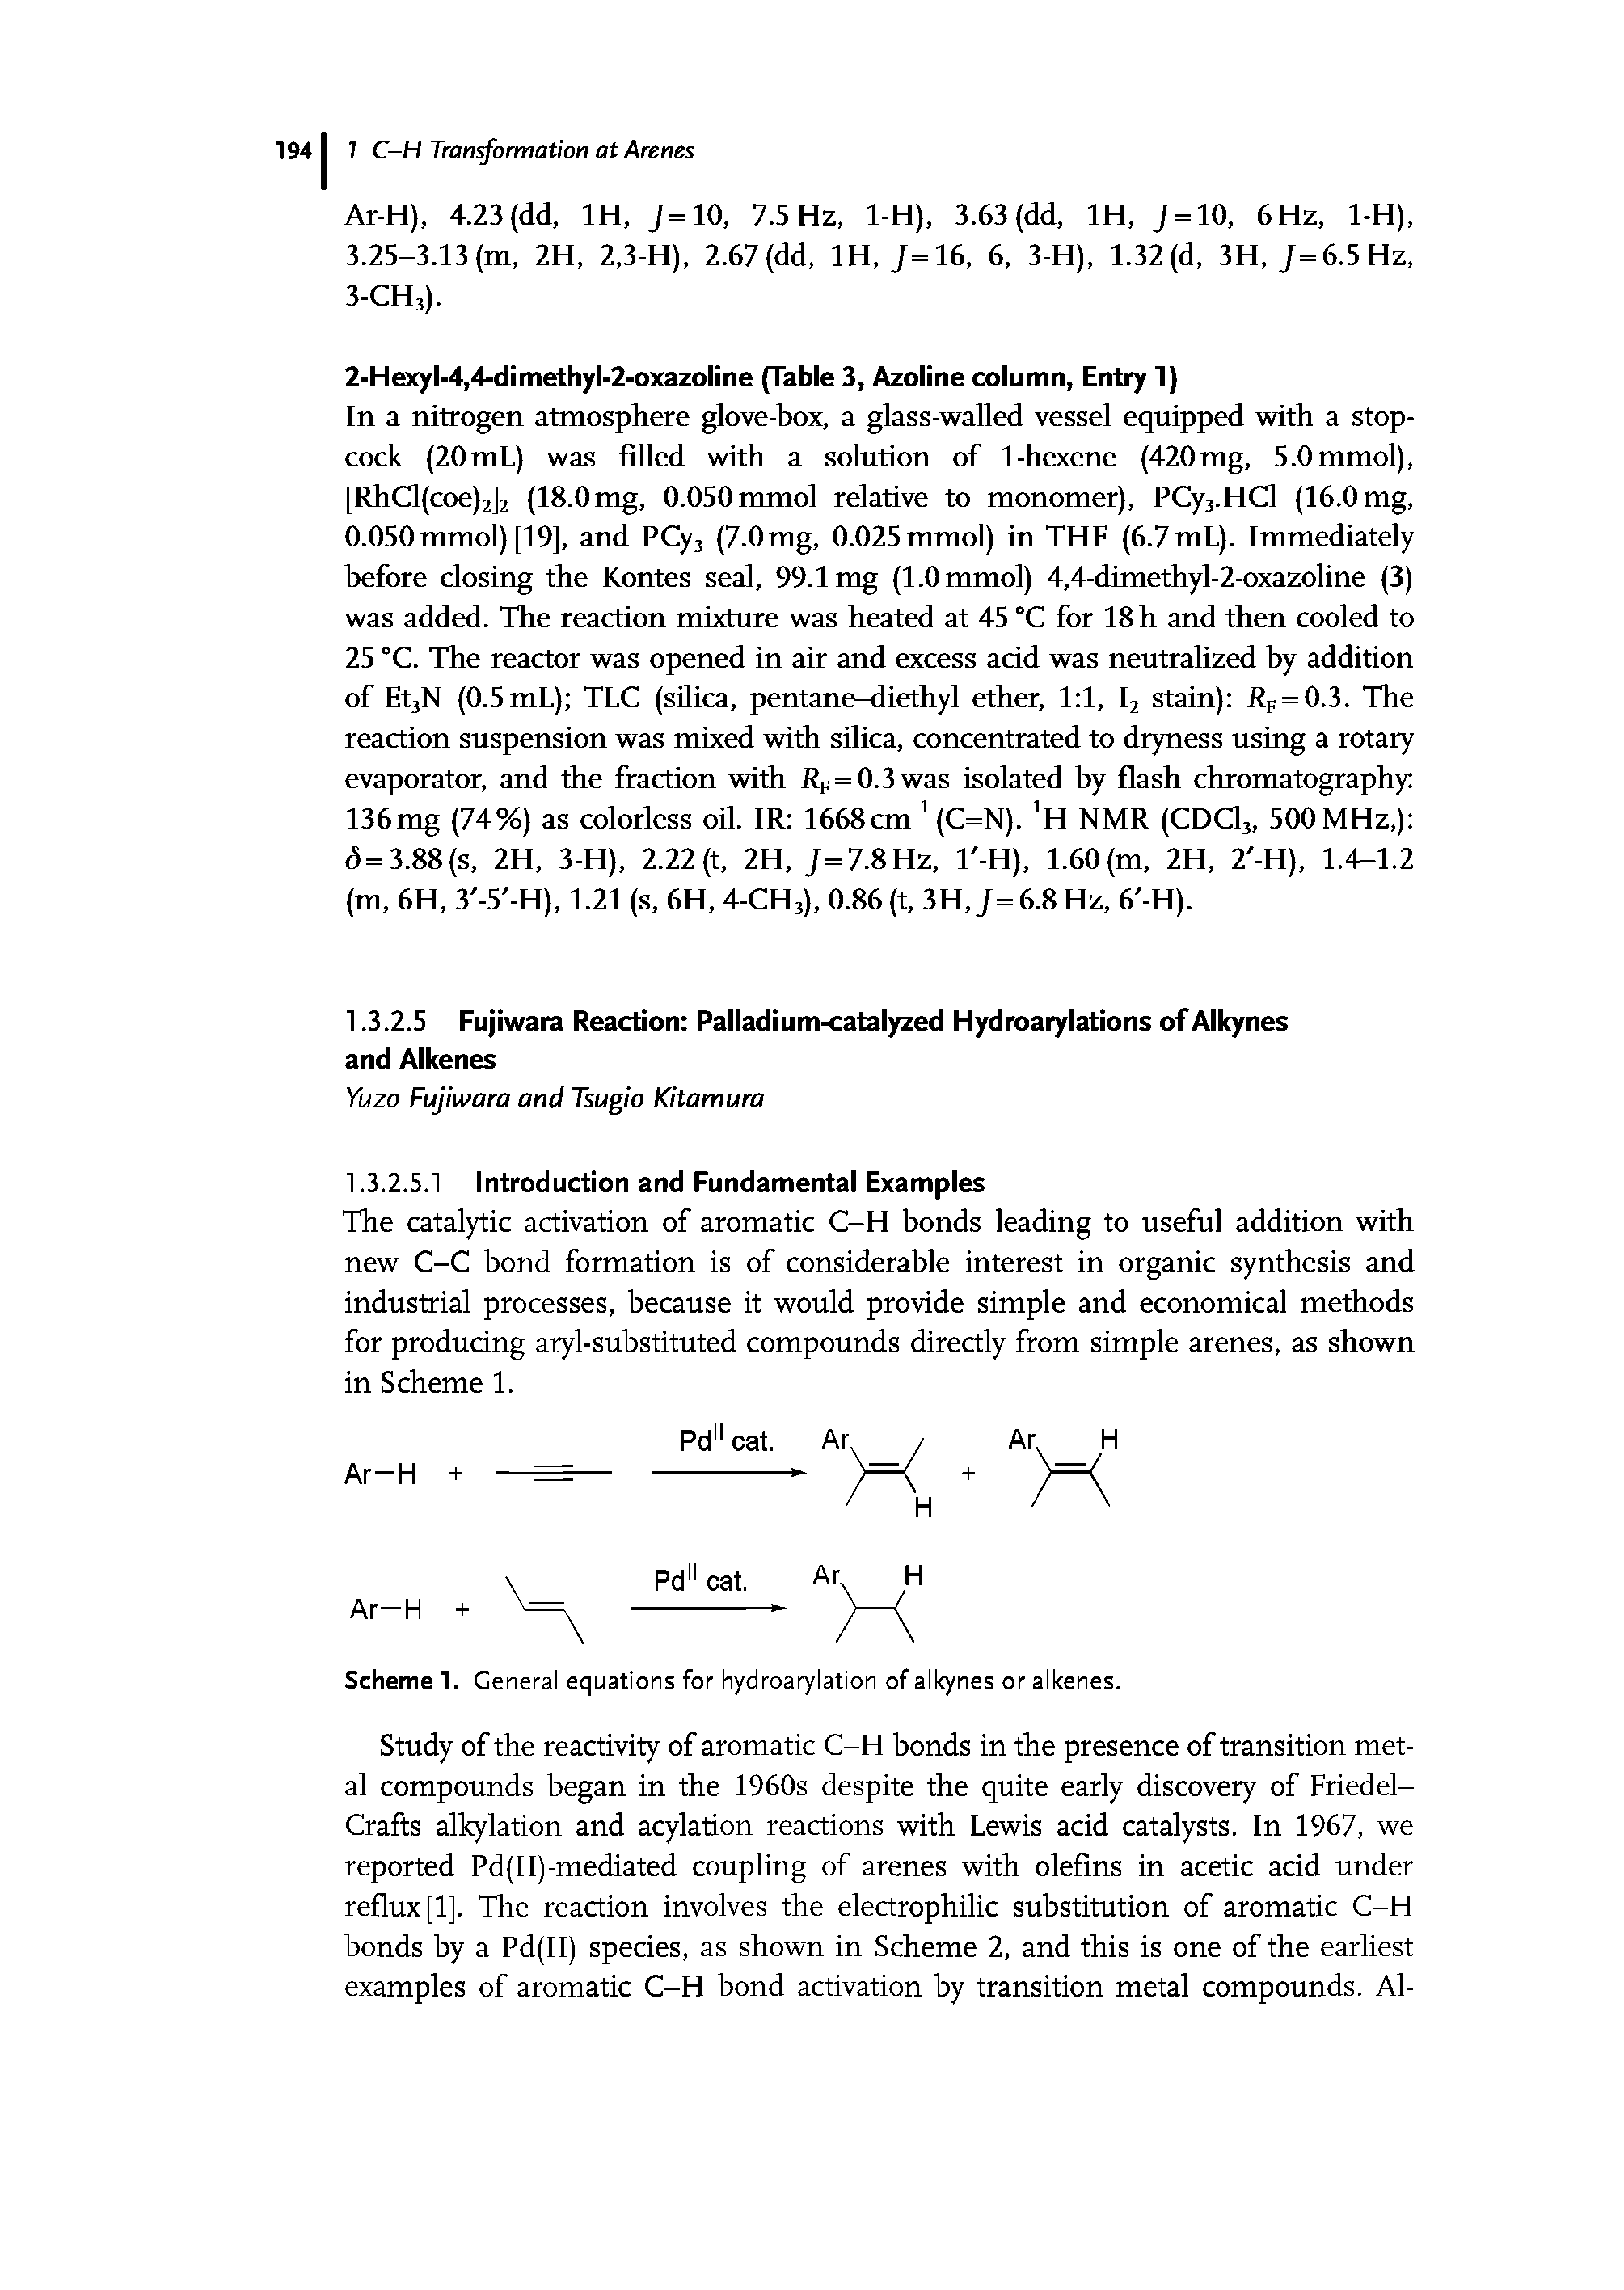 Scheme 1. General equations for hydroarylation of alkynes or alkenes.